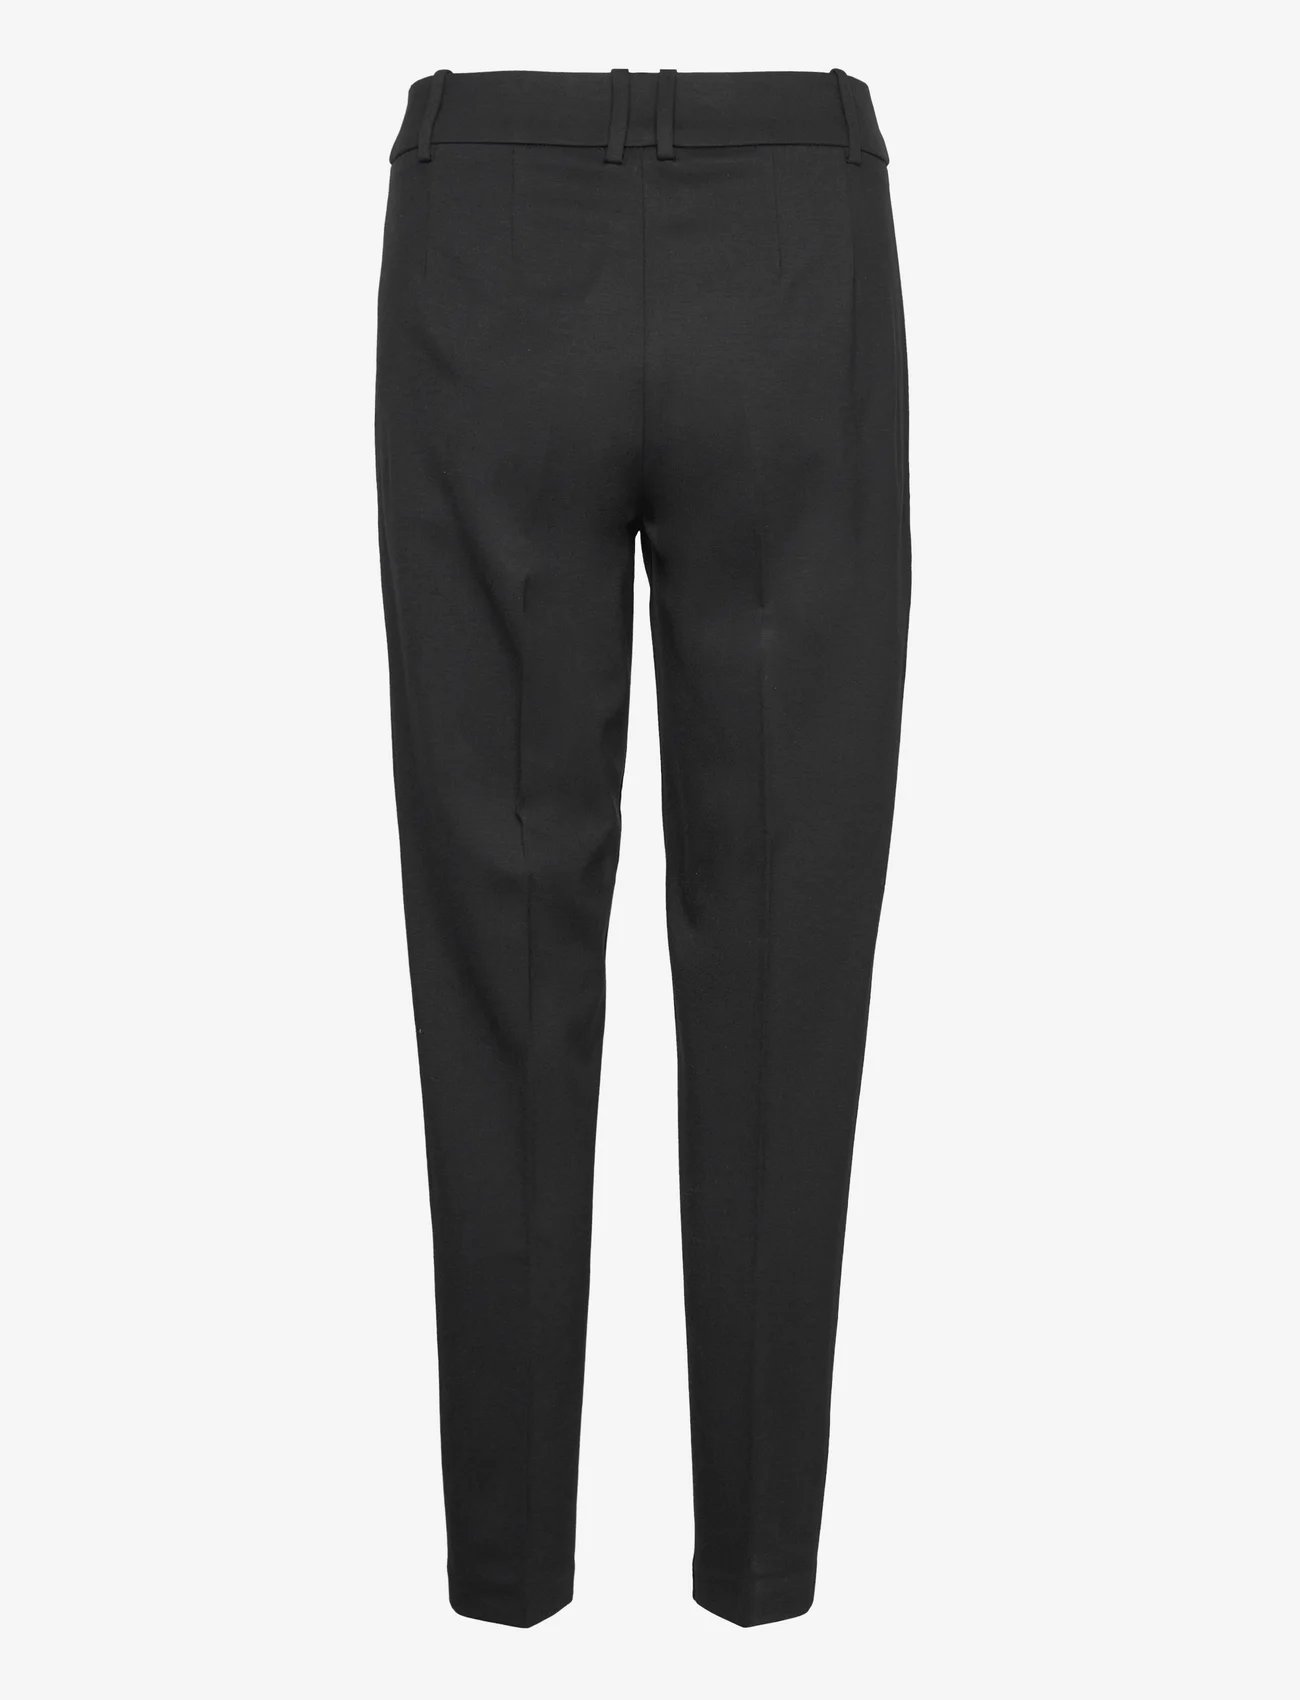 Esprit Collection - Pants woven - tiesaus kirpimo kelnės - black - 1